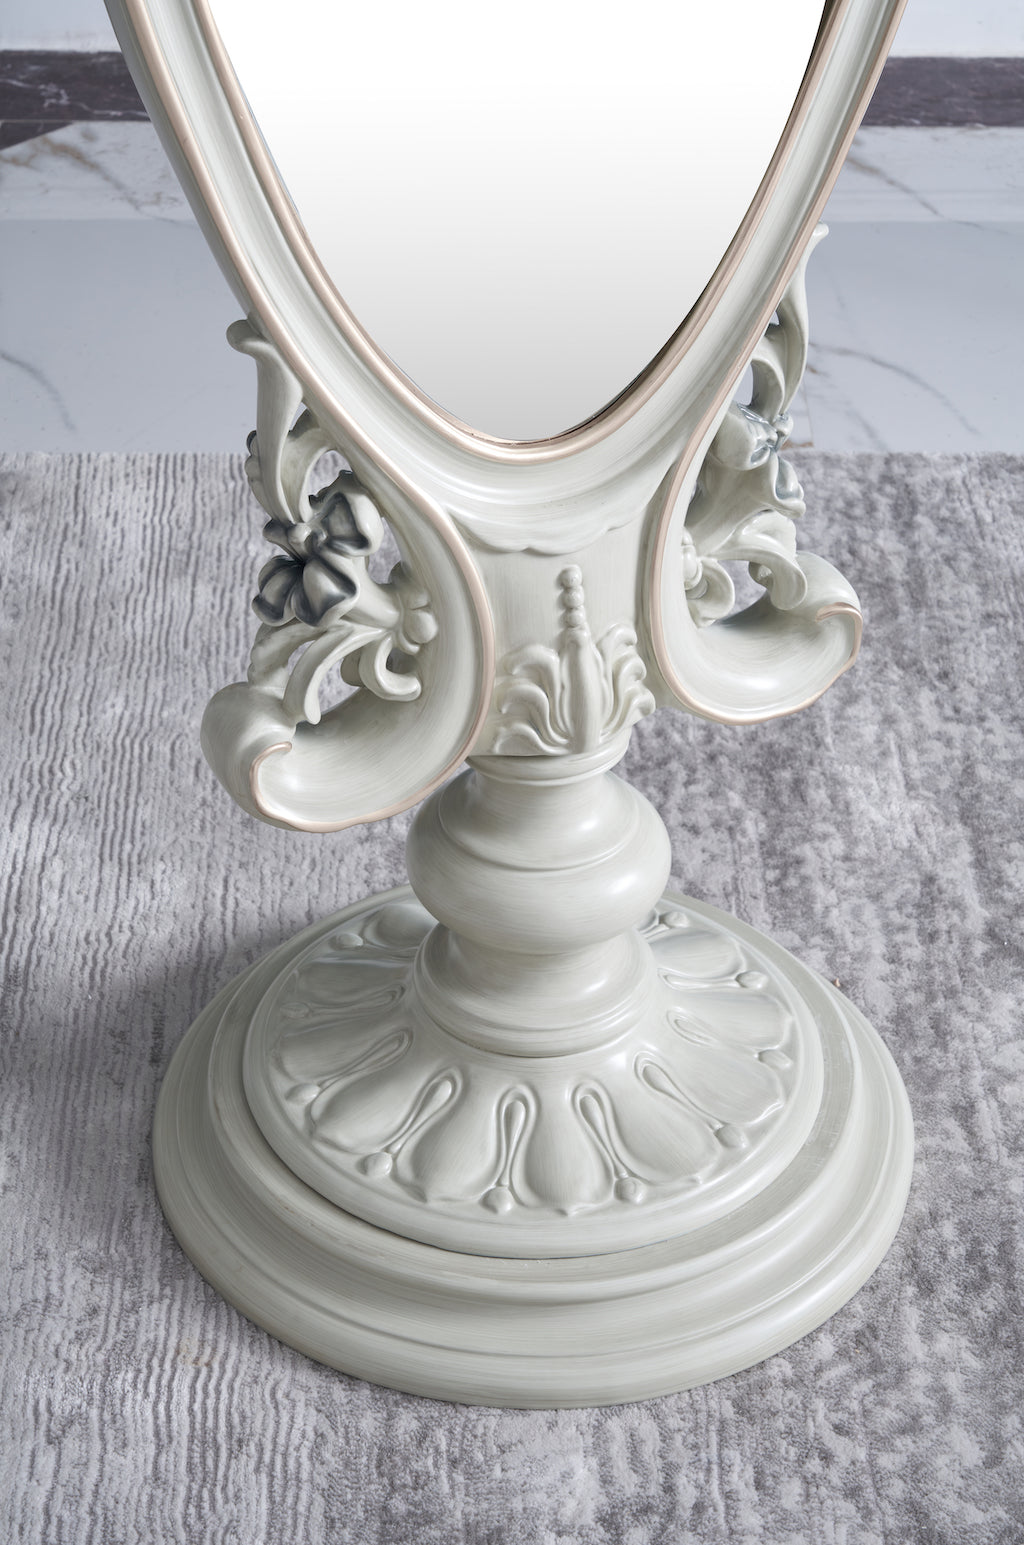 Antoinette French Mirror